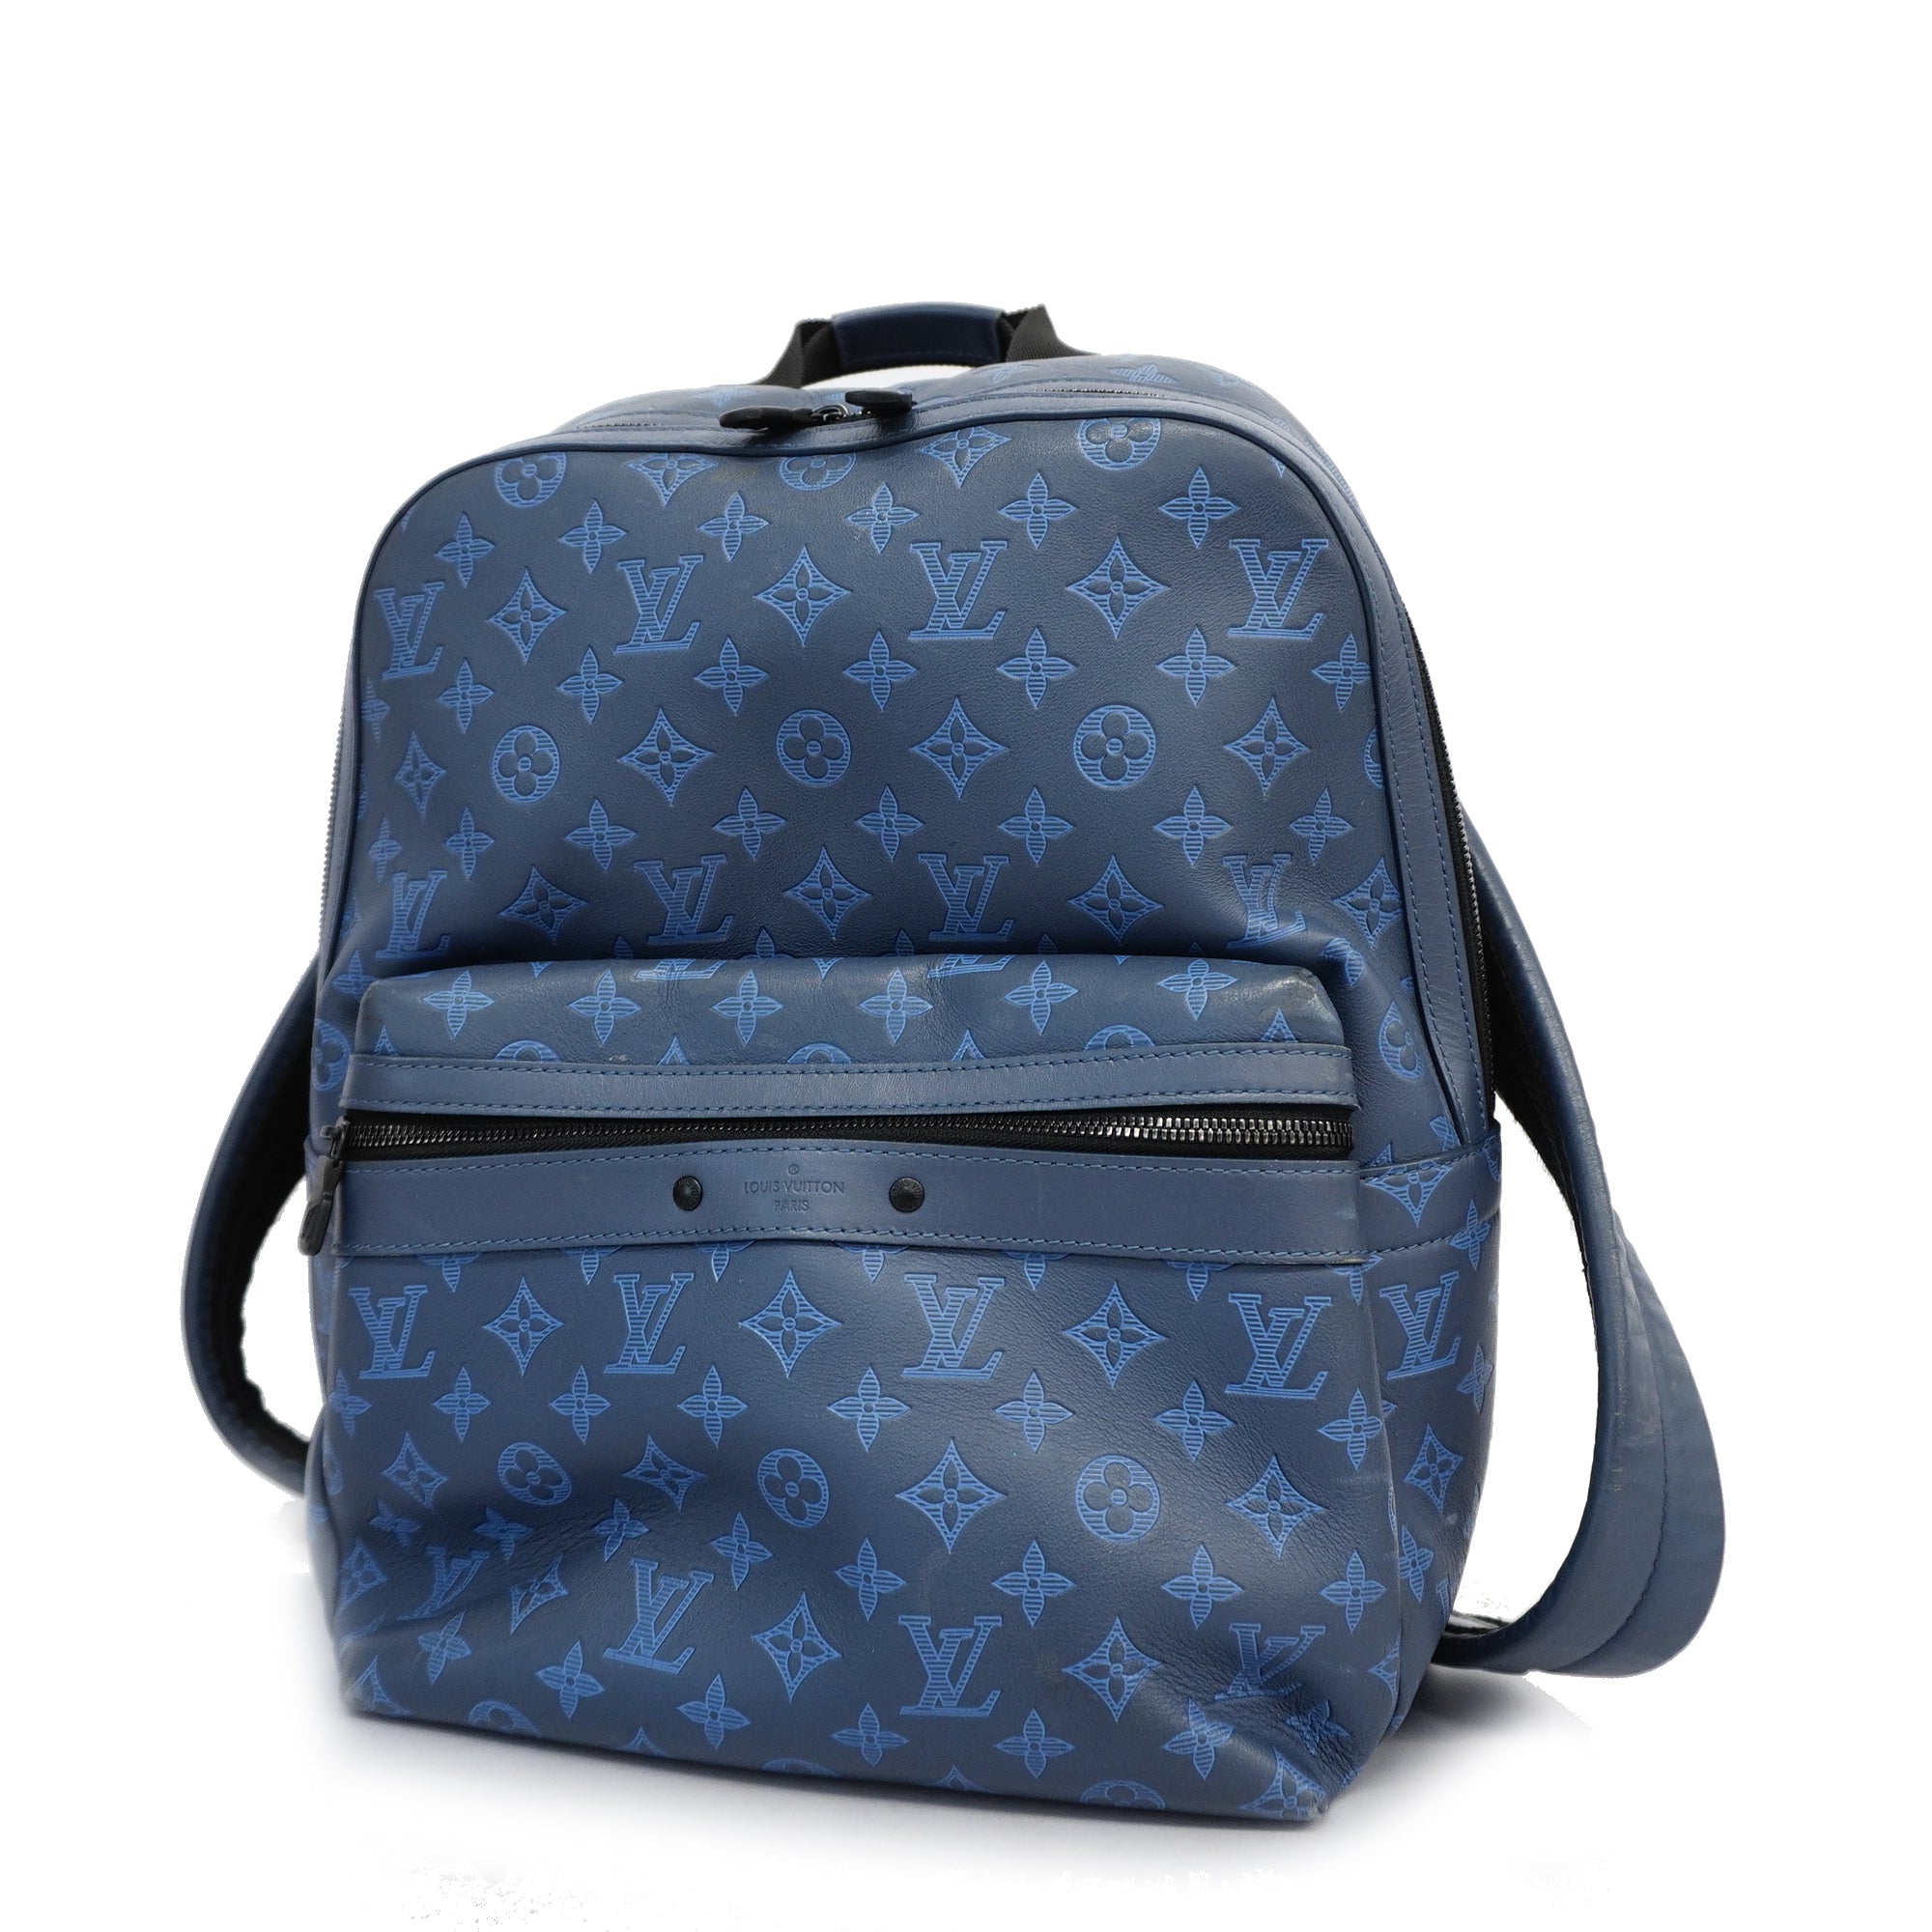 Louis Vuitton M44727 LV Sprinter Backpack in Monogram Shadow